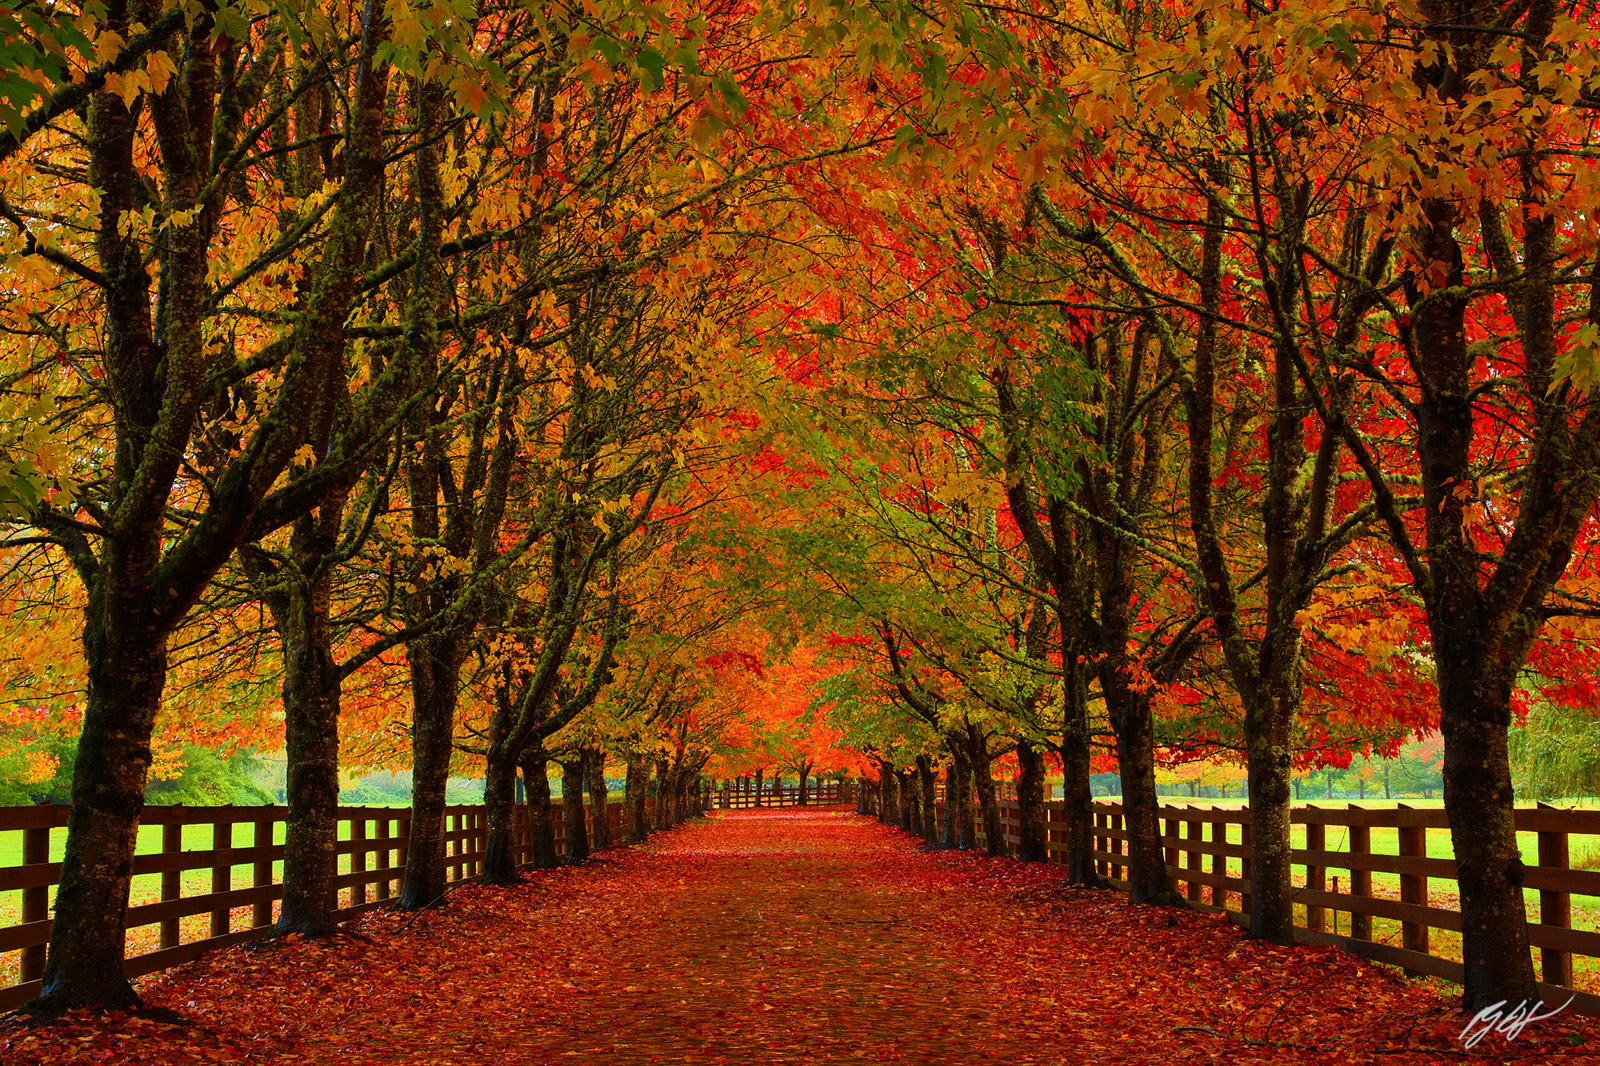 Fall Drive from Rockwood Farm in Snoqualmie, Washington